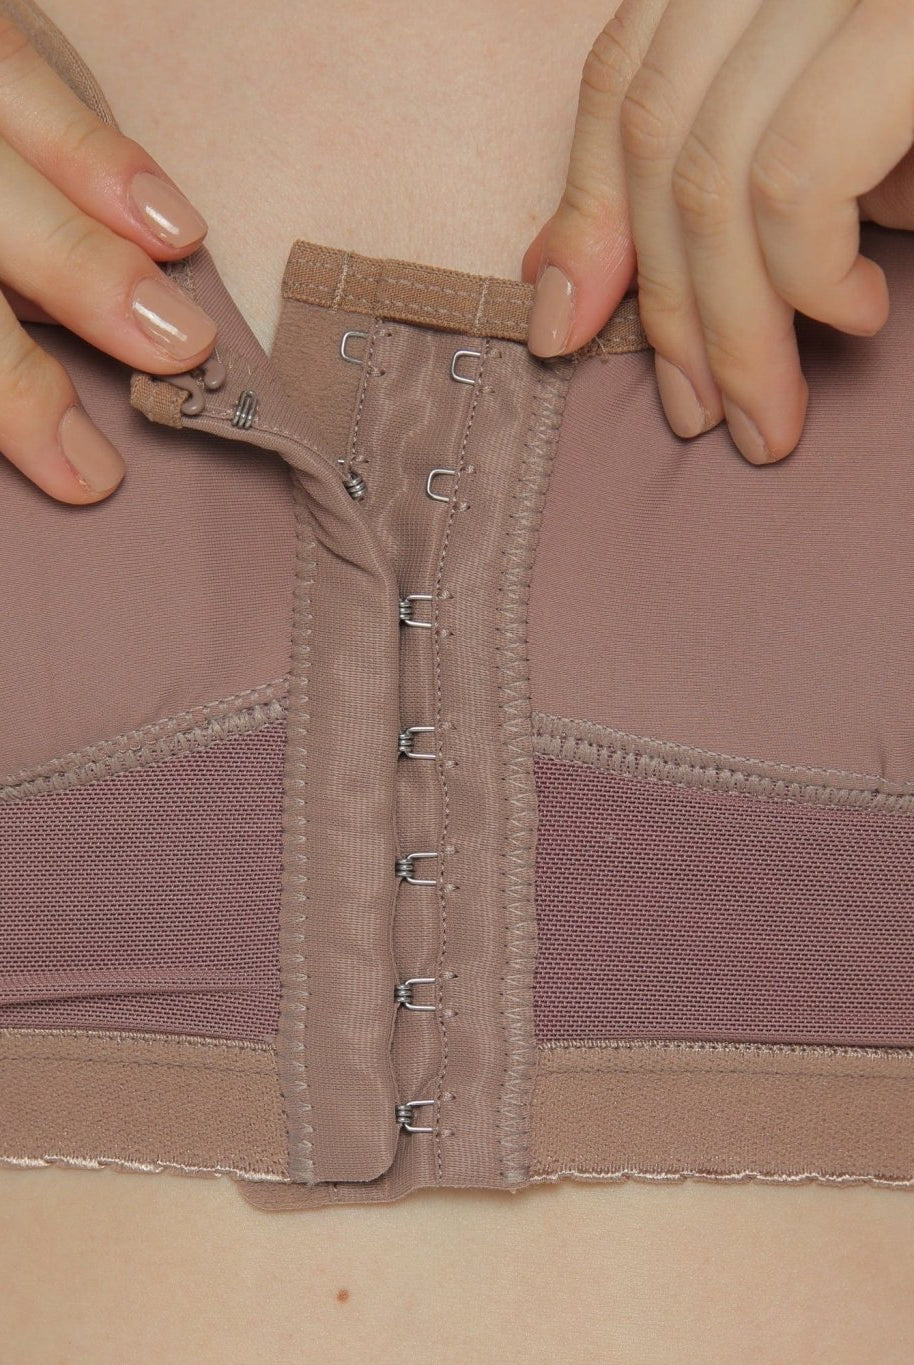 Unlined wireless Bra - High back - Posture Corrector - Sexyskinz Shapewear Fajas